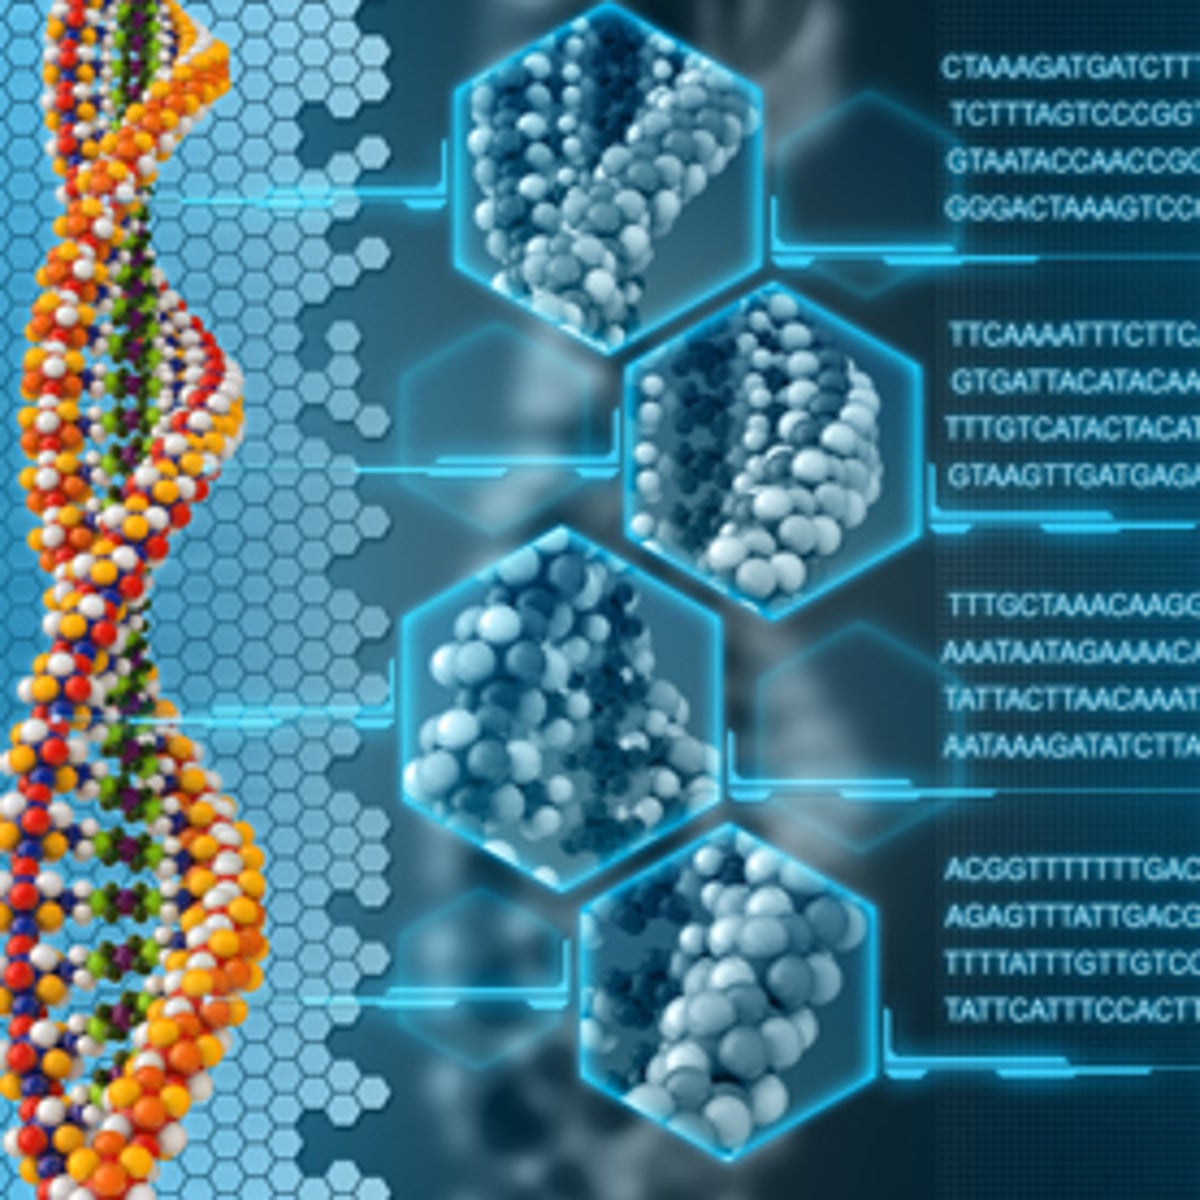 Genetic genealogy companies Ancestry, 23andMe begin COVID-19 research